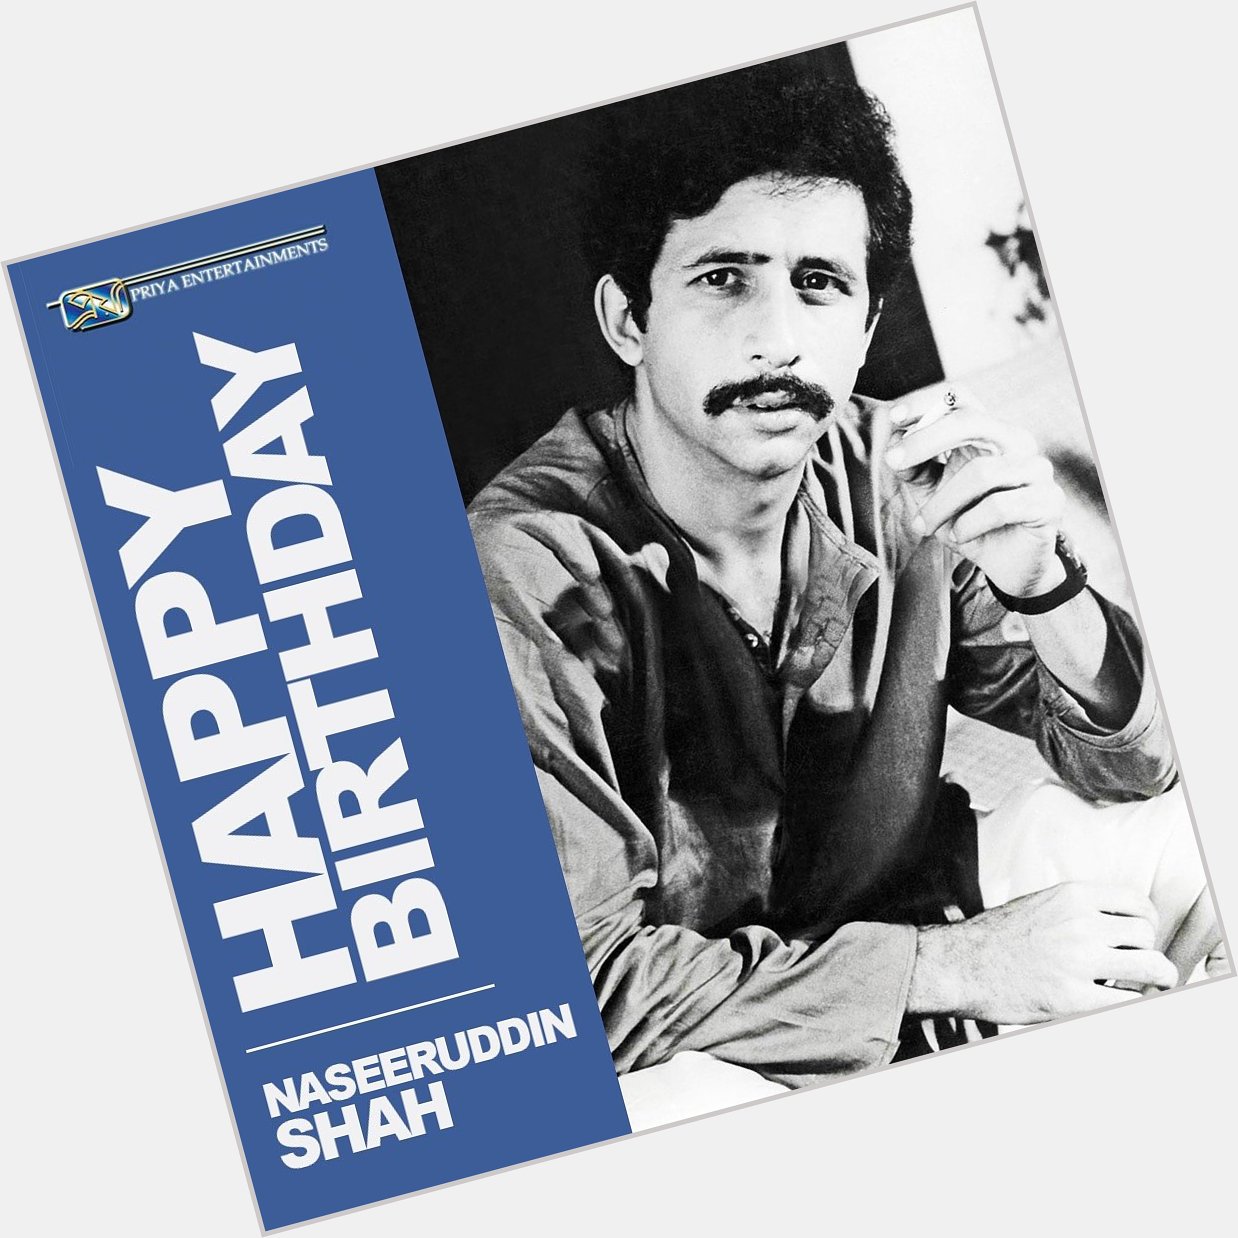 Wishing one of the versatile actors of Indian Cinema, Naseeruddin Shah, a Very Happy Birthday. 